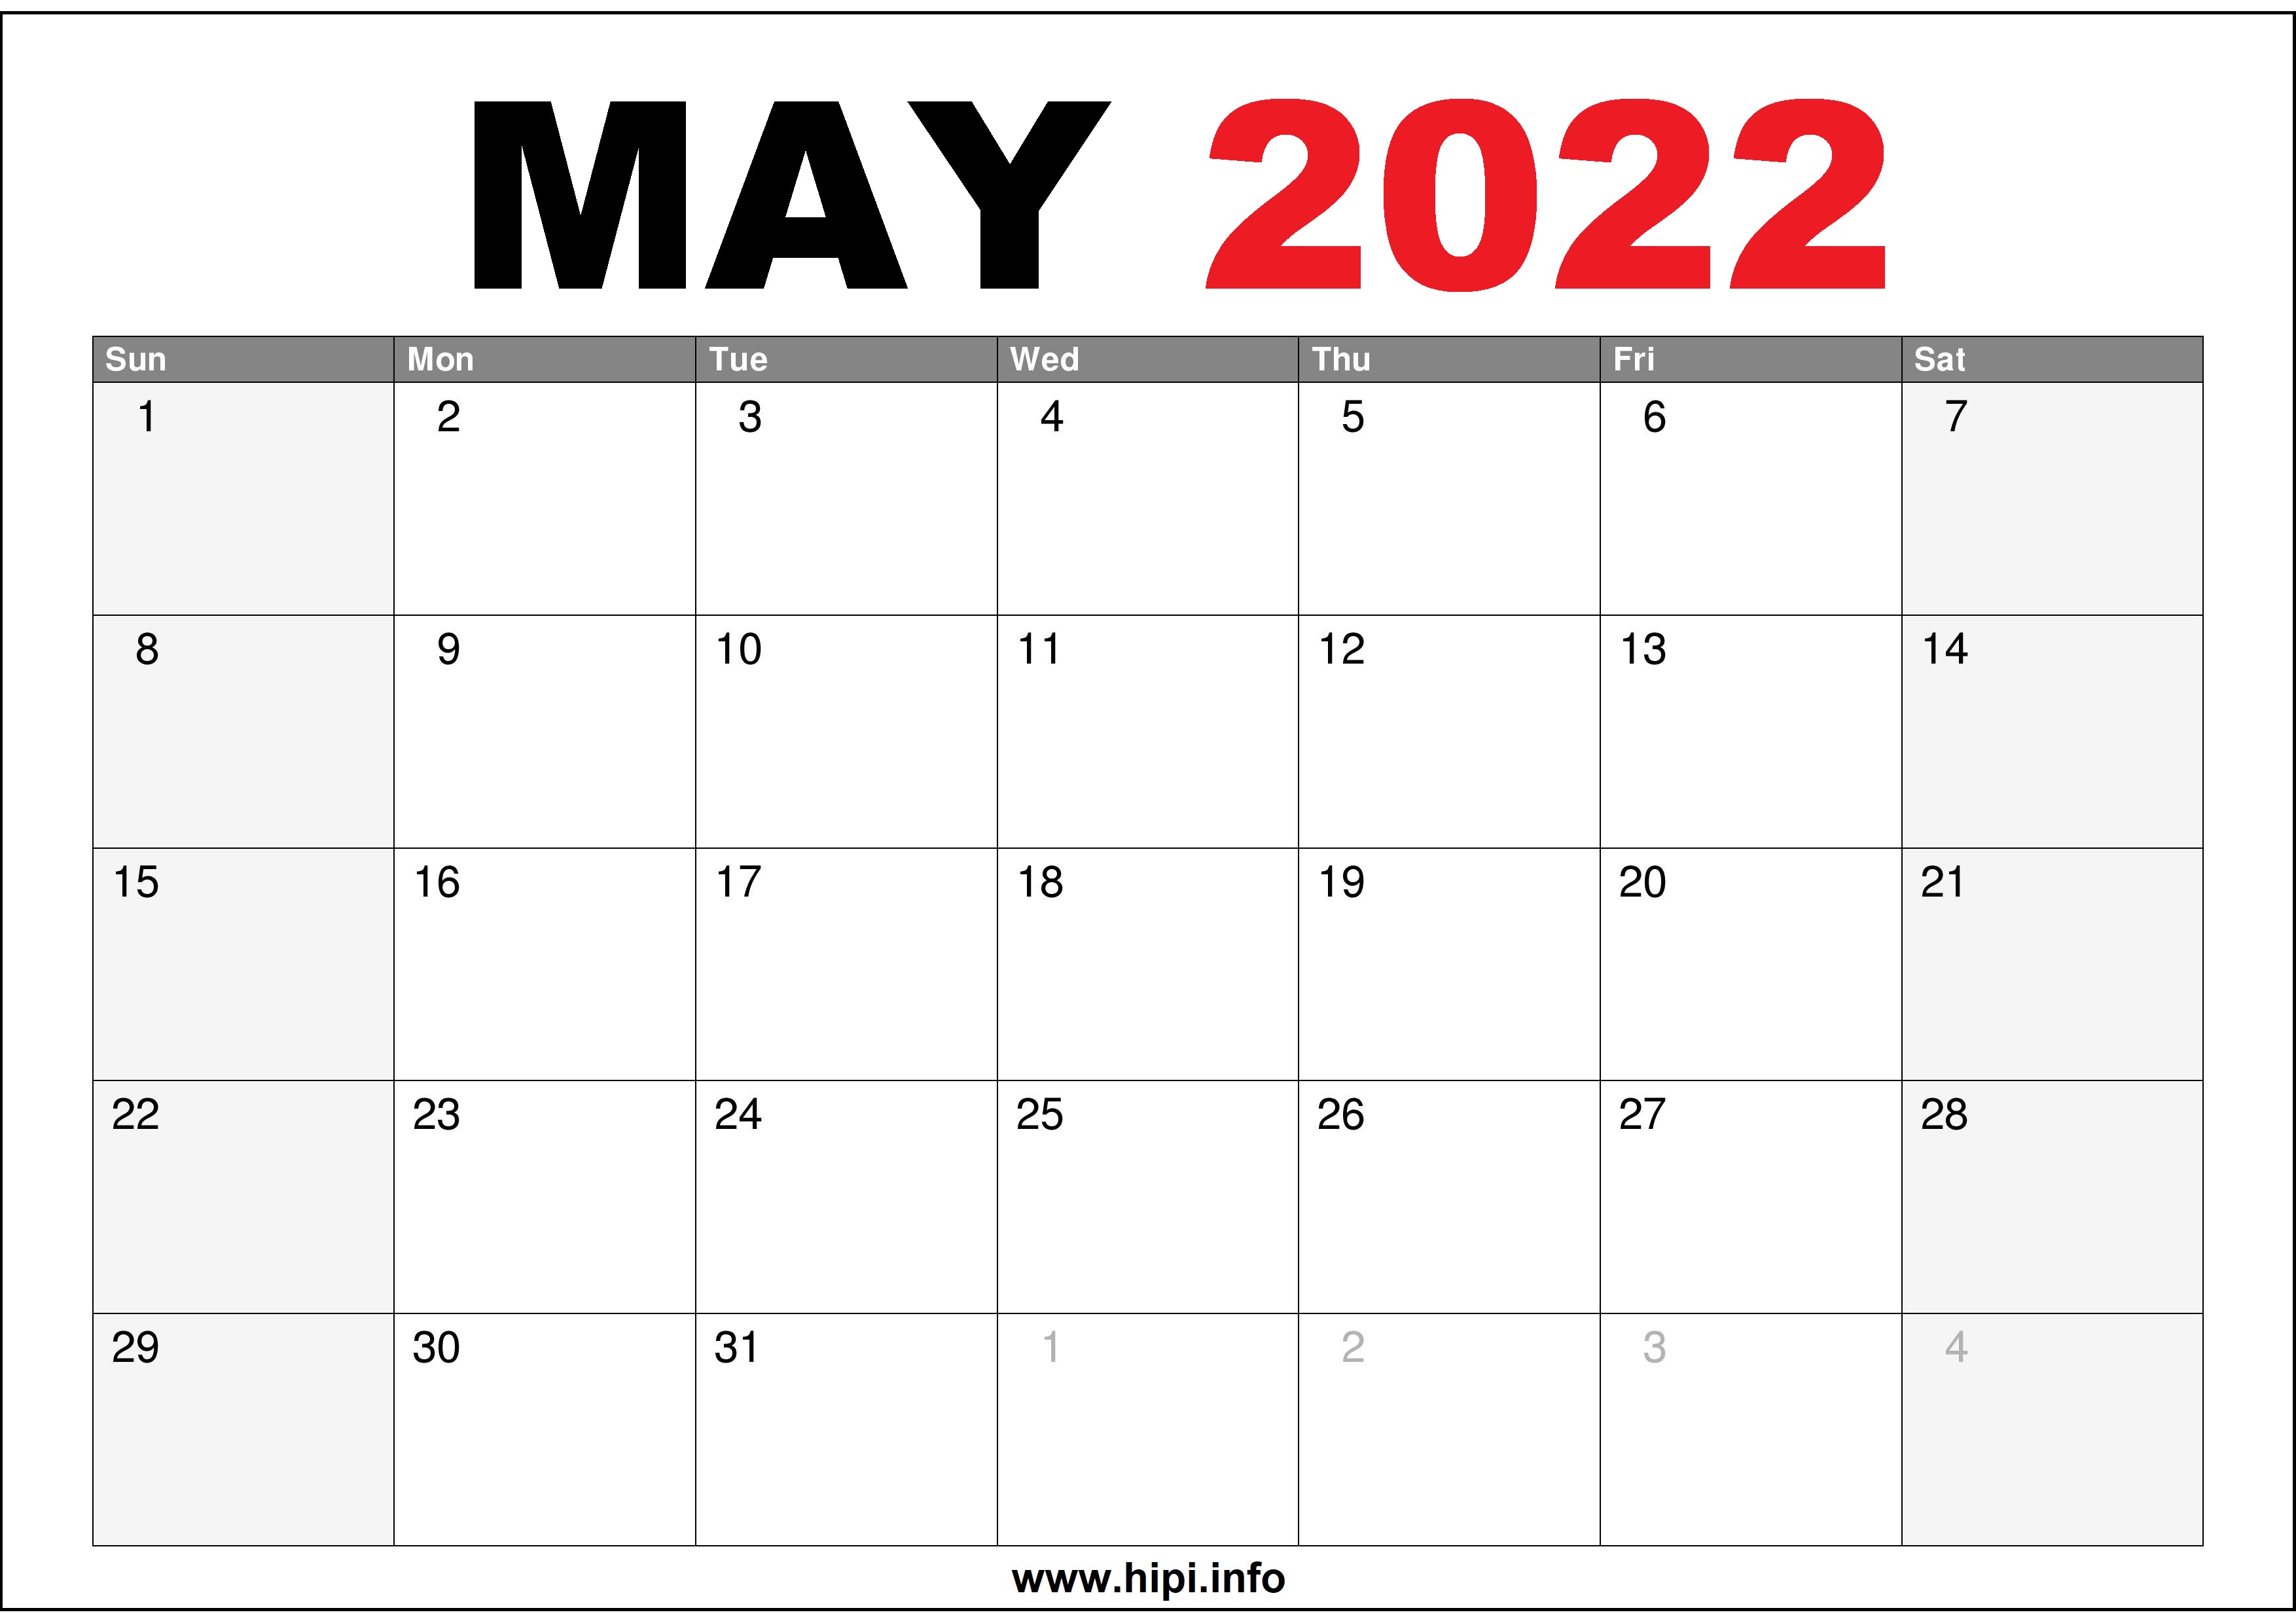 May 2022 Calendar Template May 2022 Calendar Printable Us - Hipi.info | Calendars Printable Free